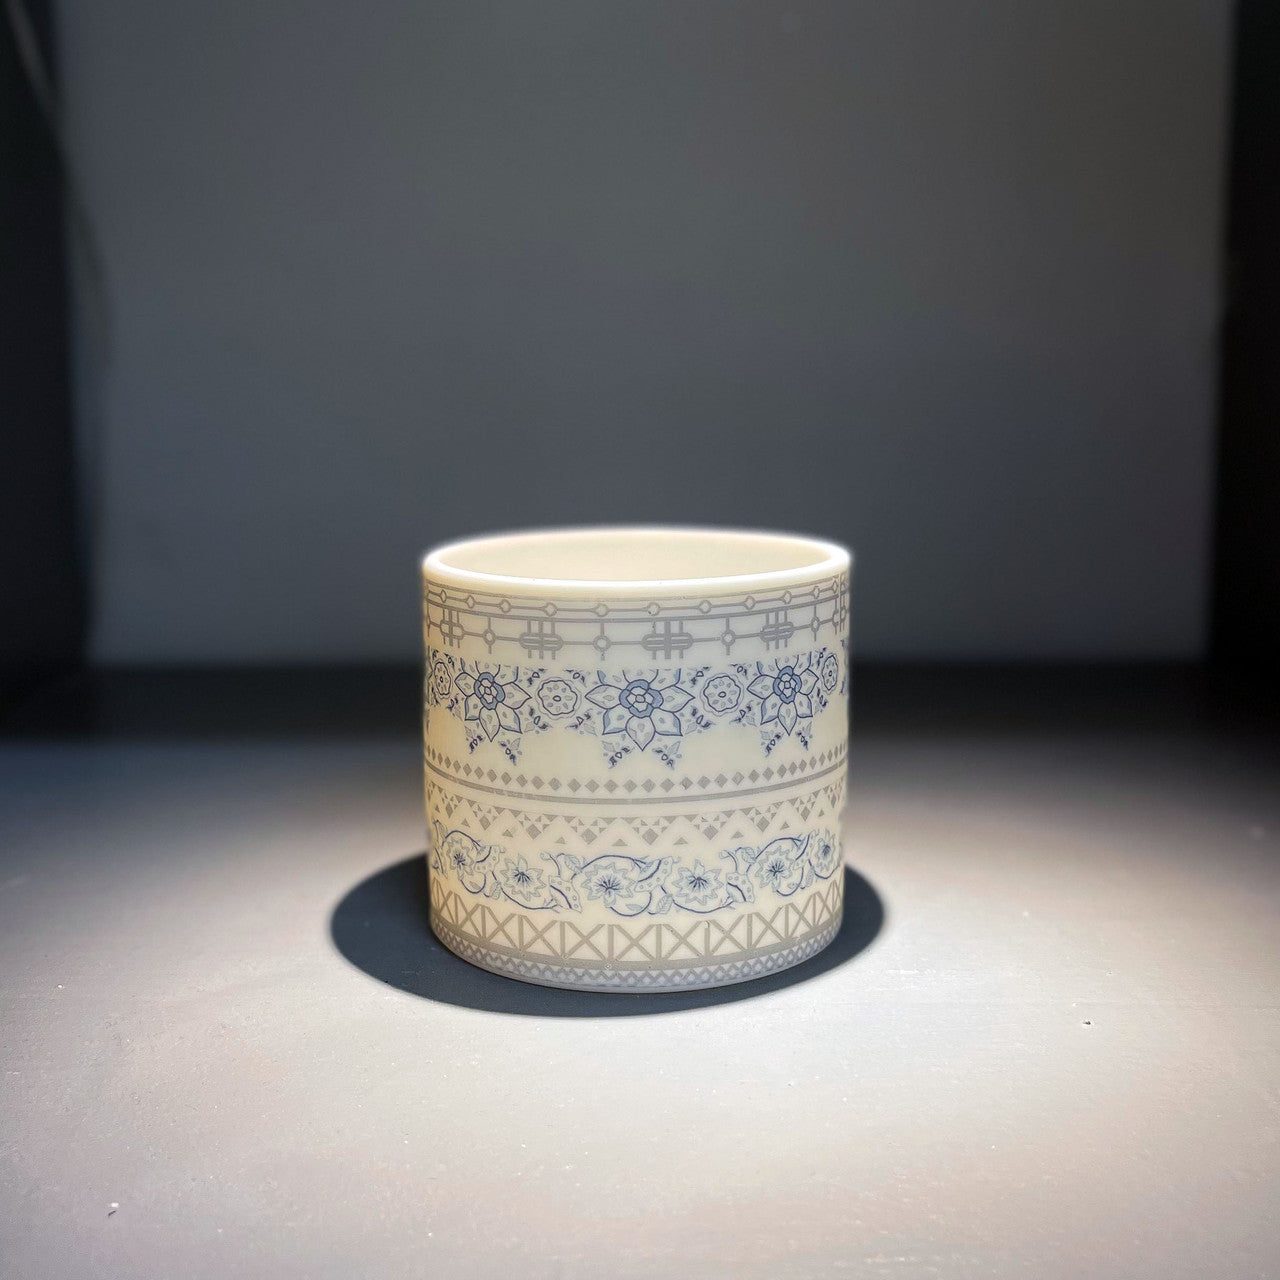 Alex Allday Safflower Ceramic Tea Light Holder